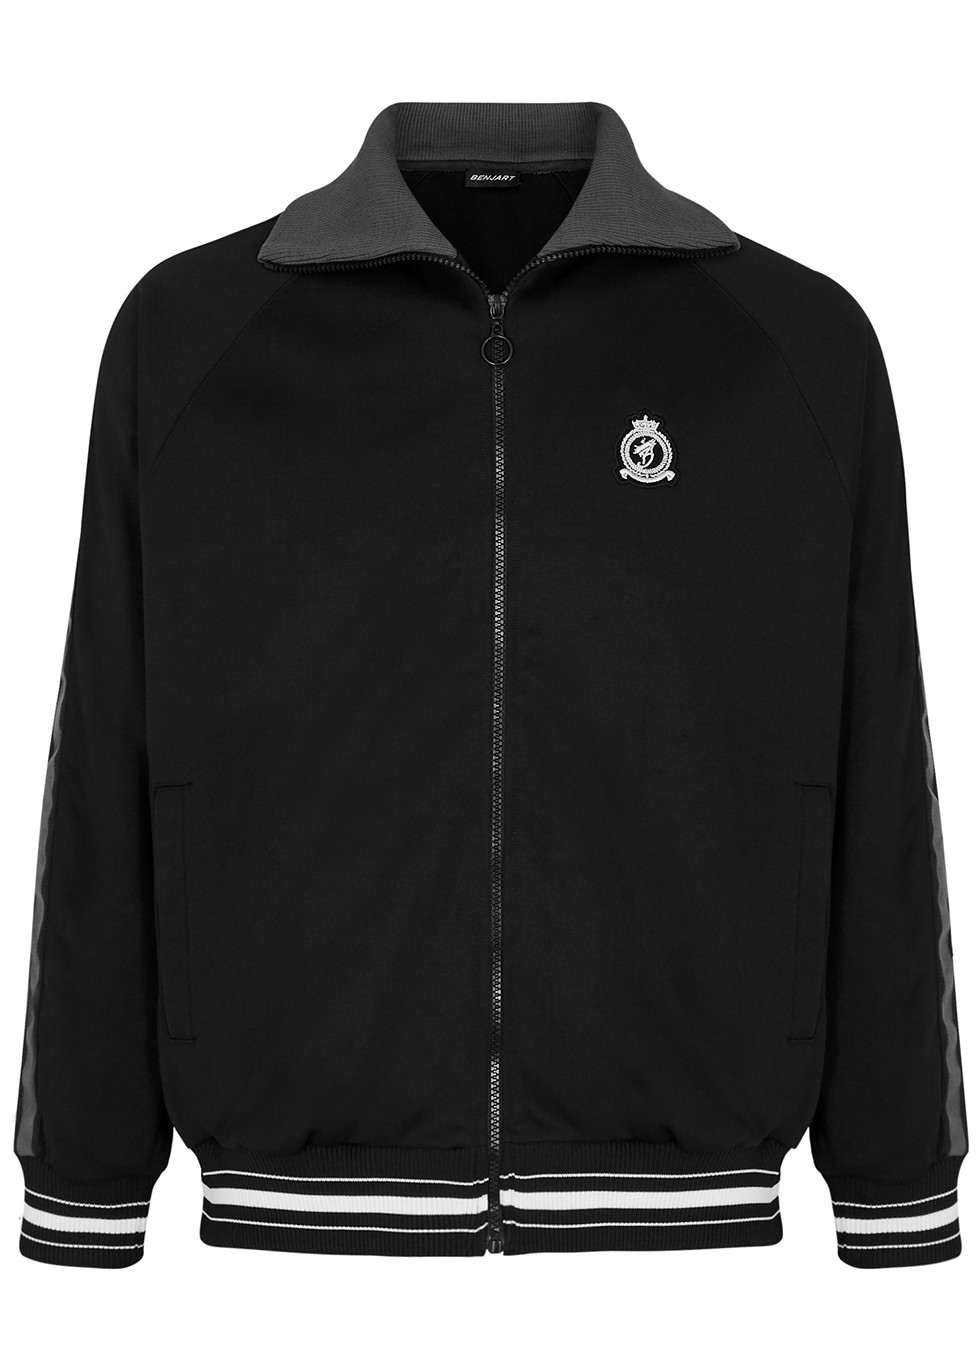 BENJART Black logo jersey track jacket - Harvey Nichols